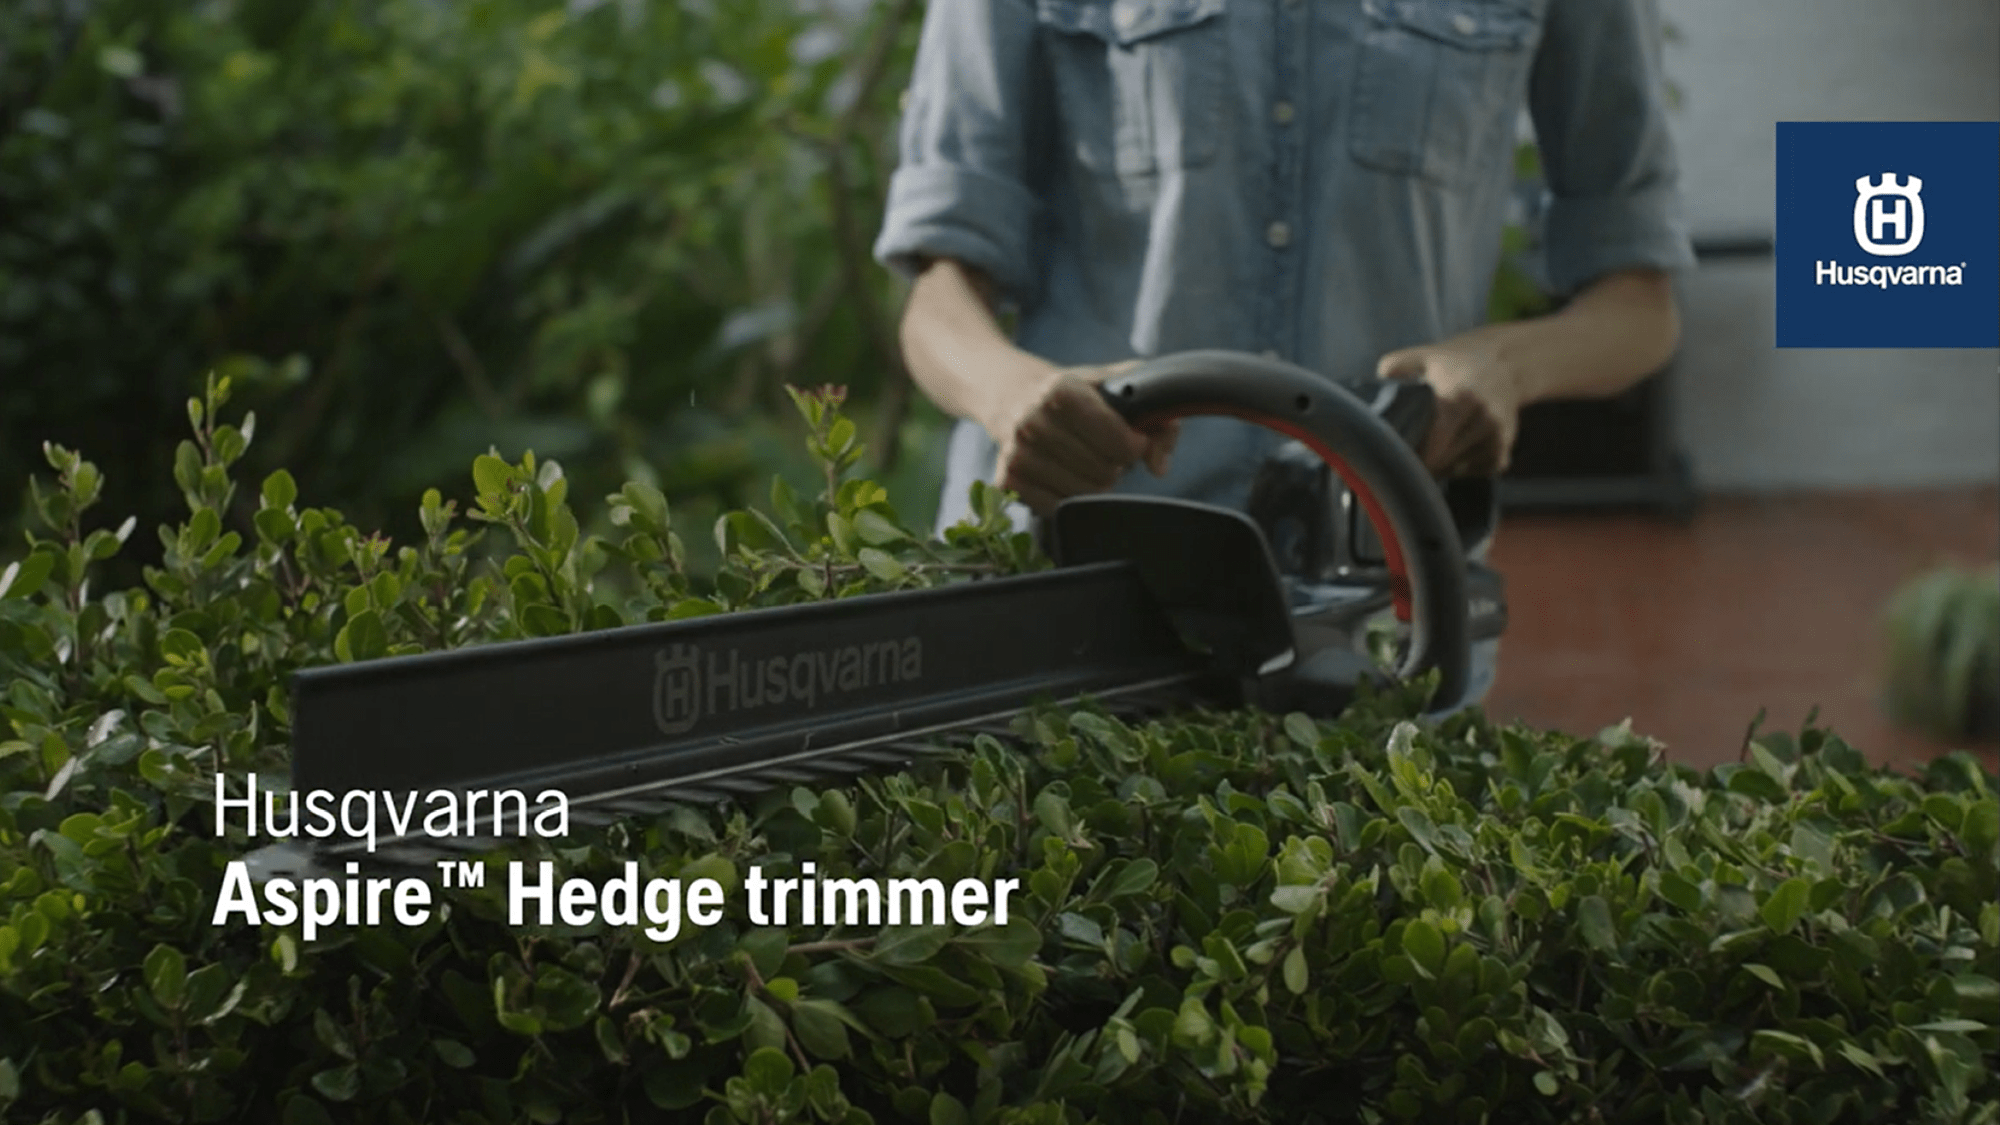 Aspire Hedge Trimmer Hybrid 16x9 MASTER